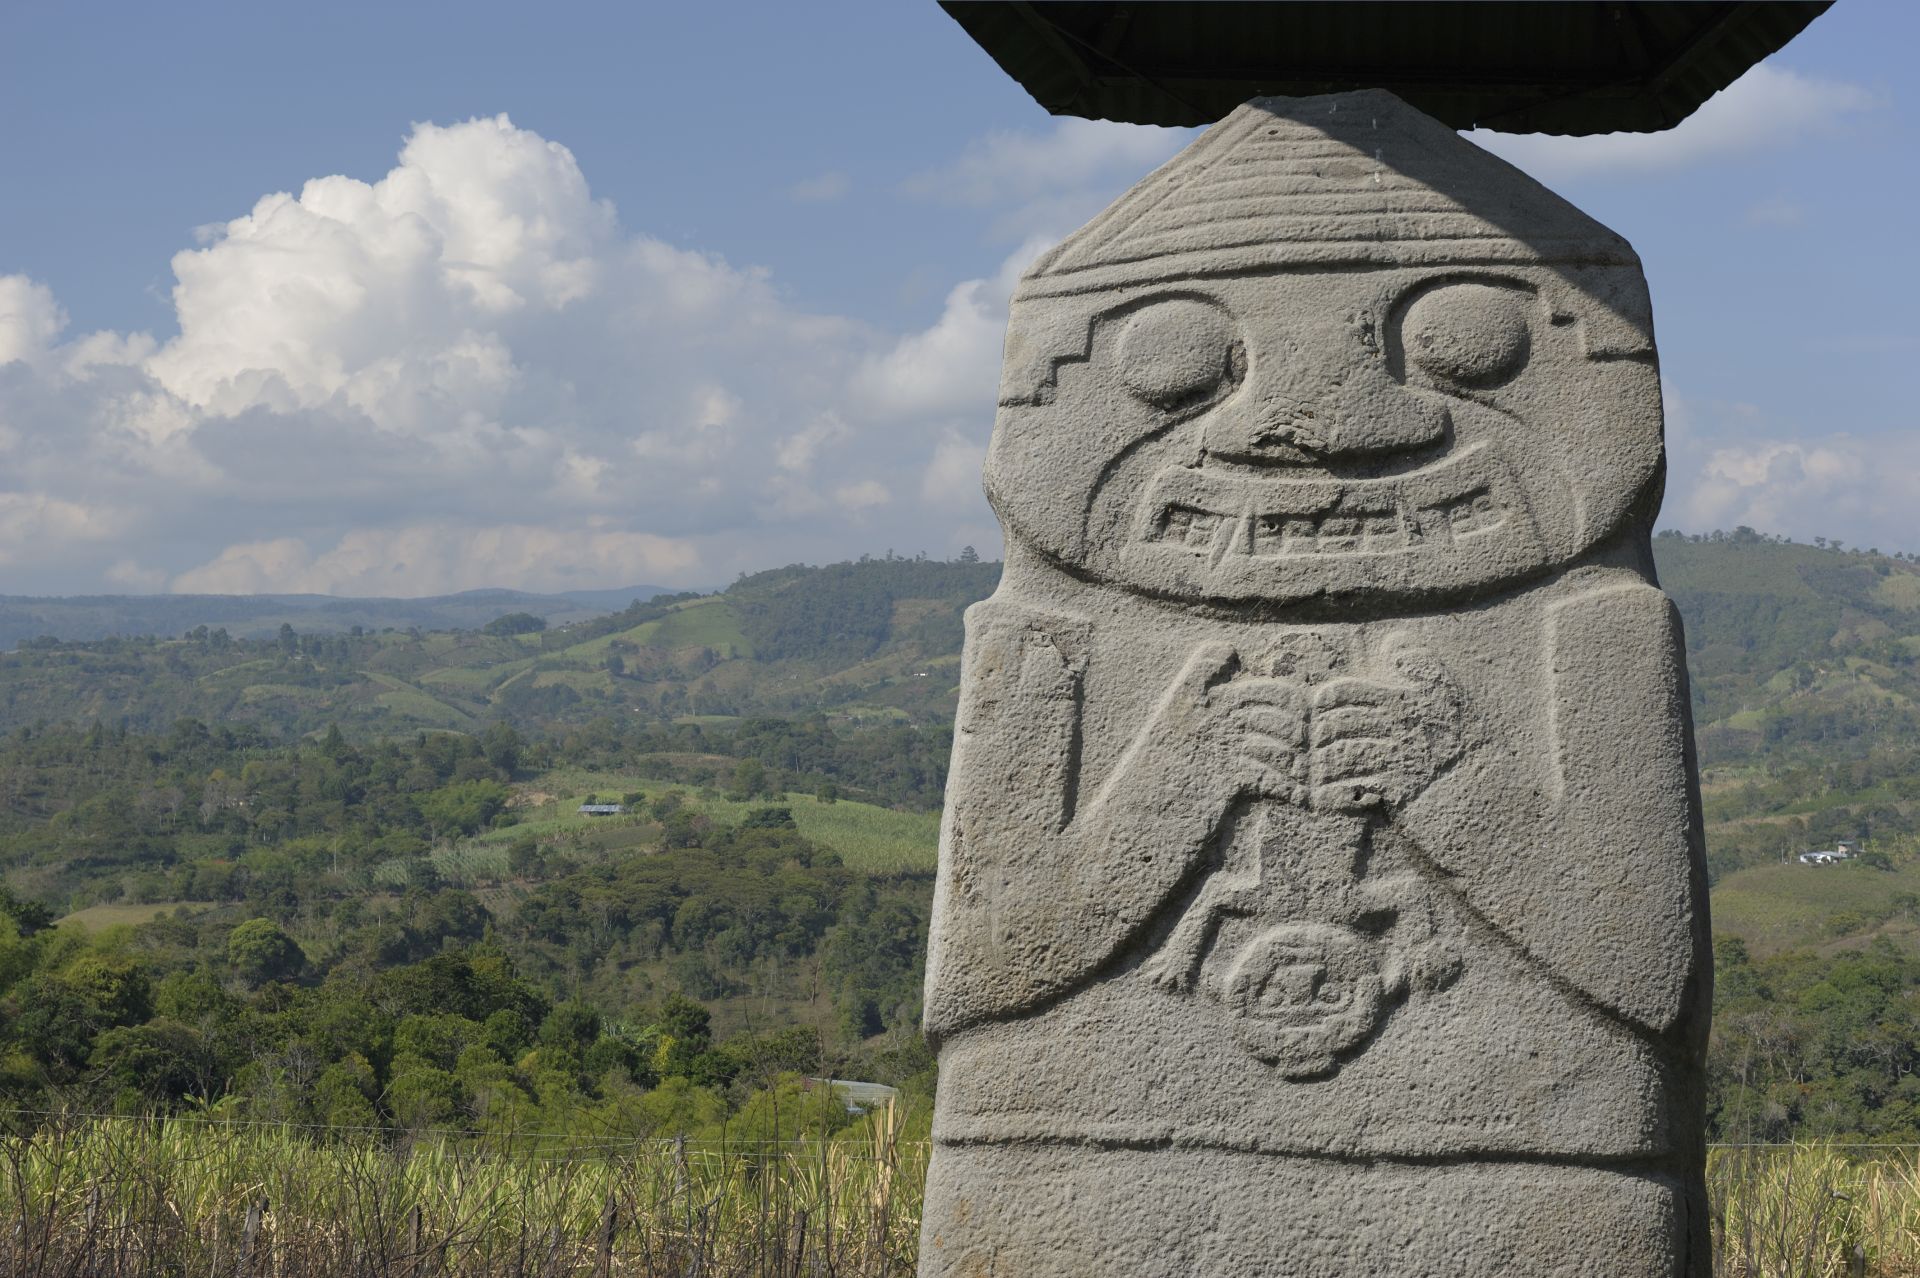 (m)Landscape, San Agustin, Department Huila, Colombia